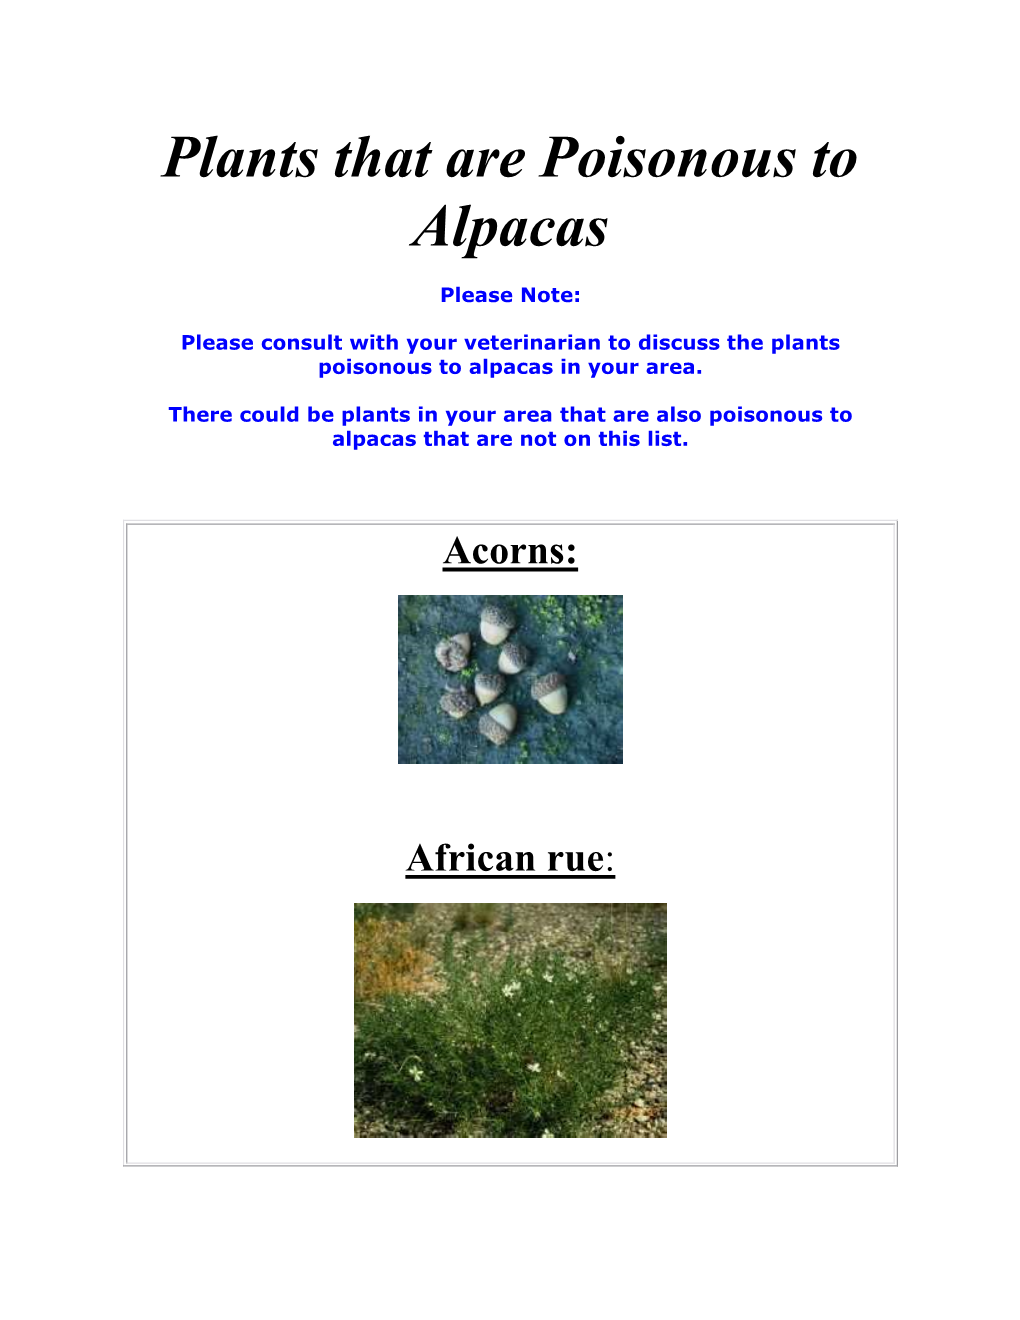 Plants That Are Poisonous to Alpacas